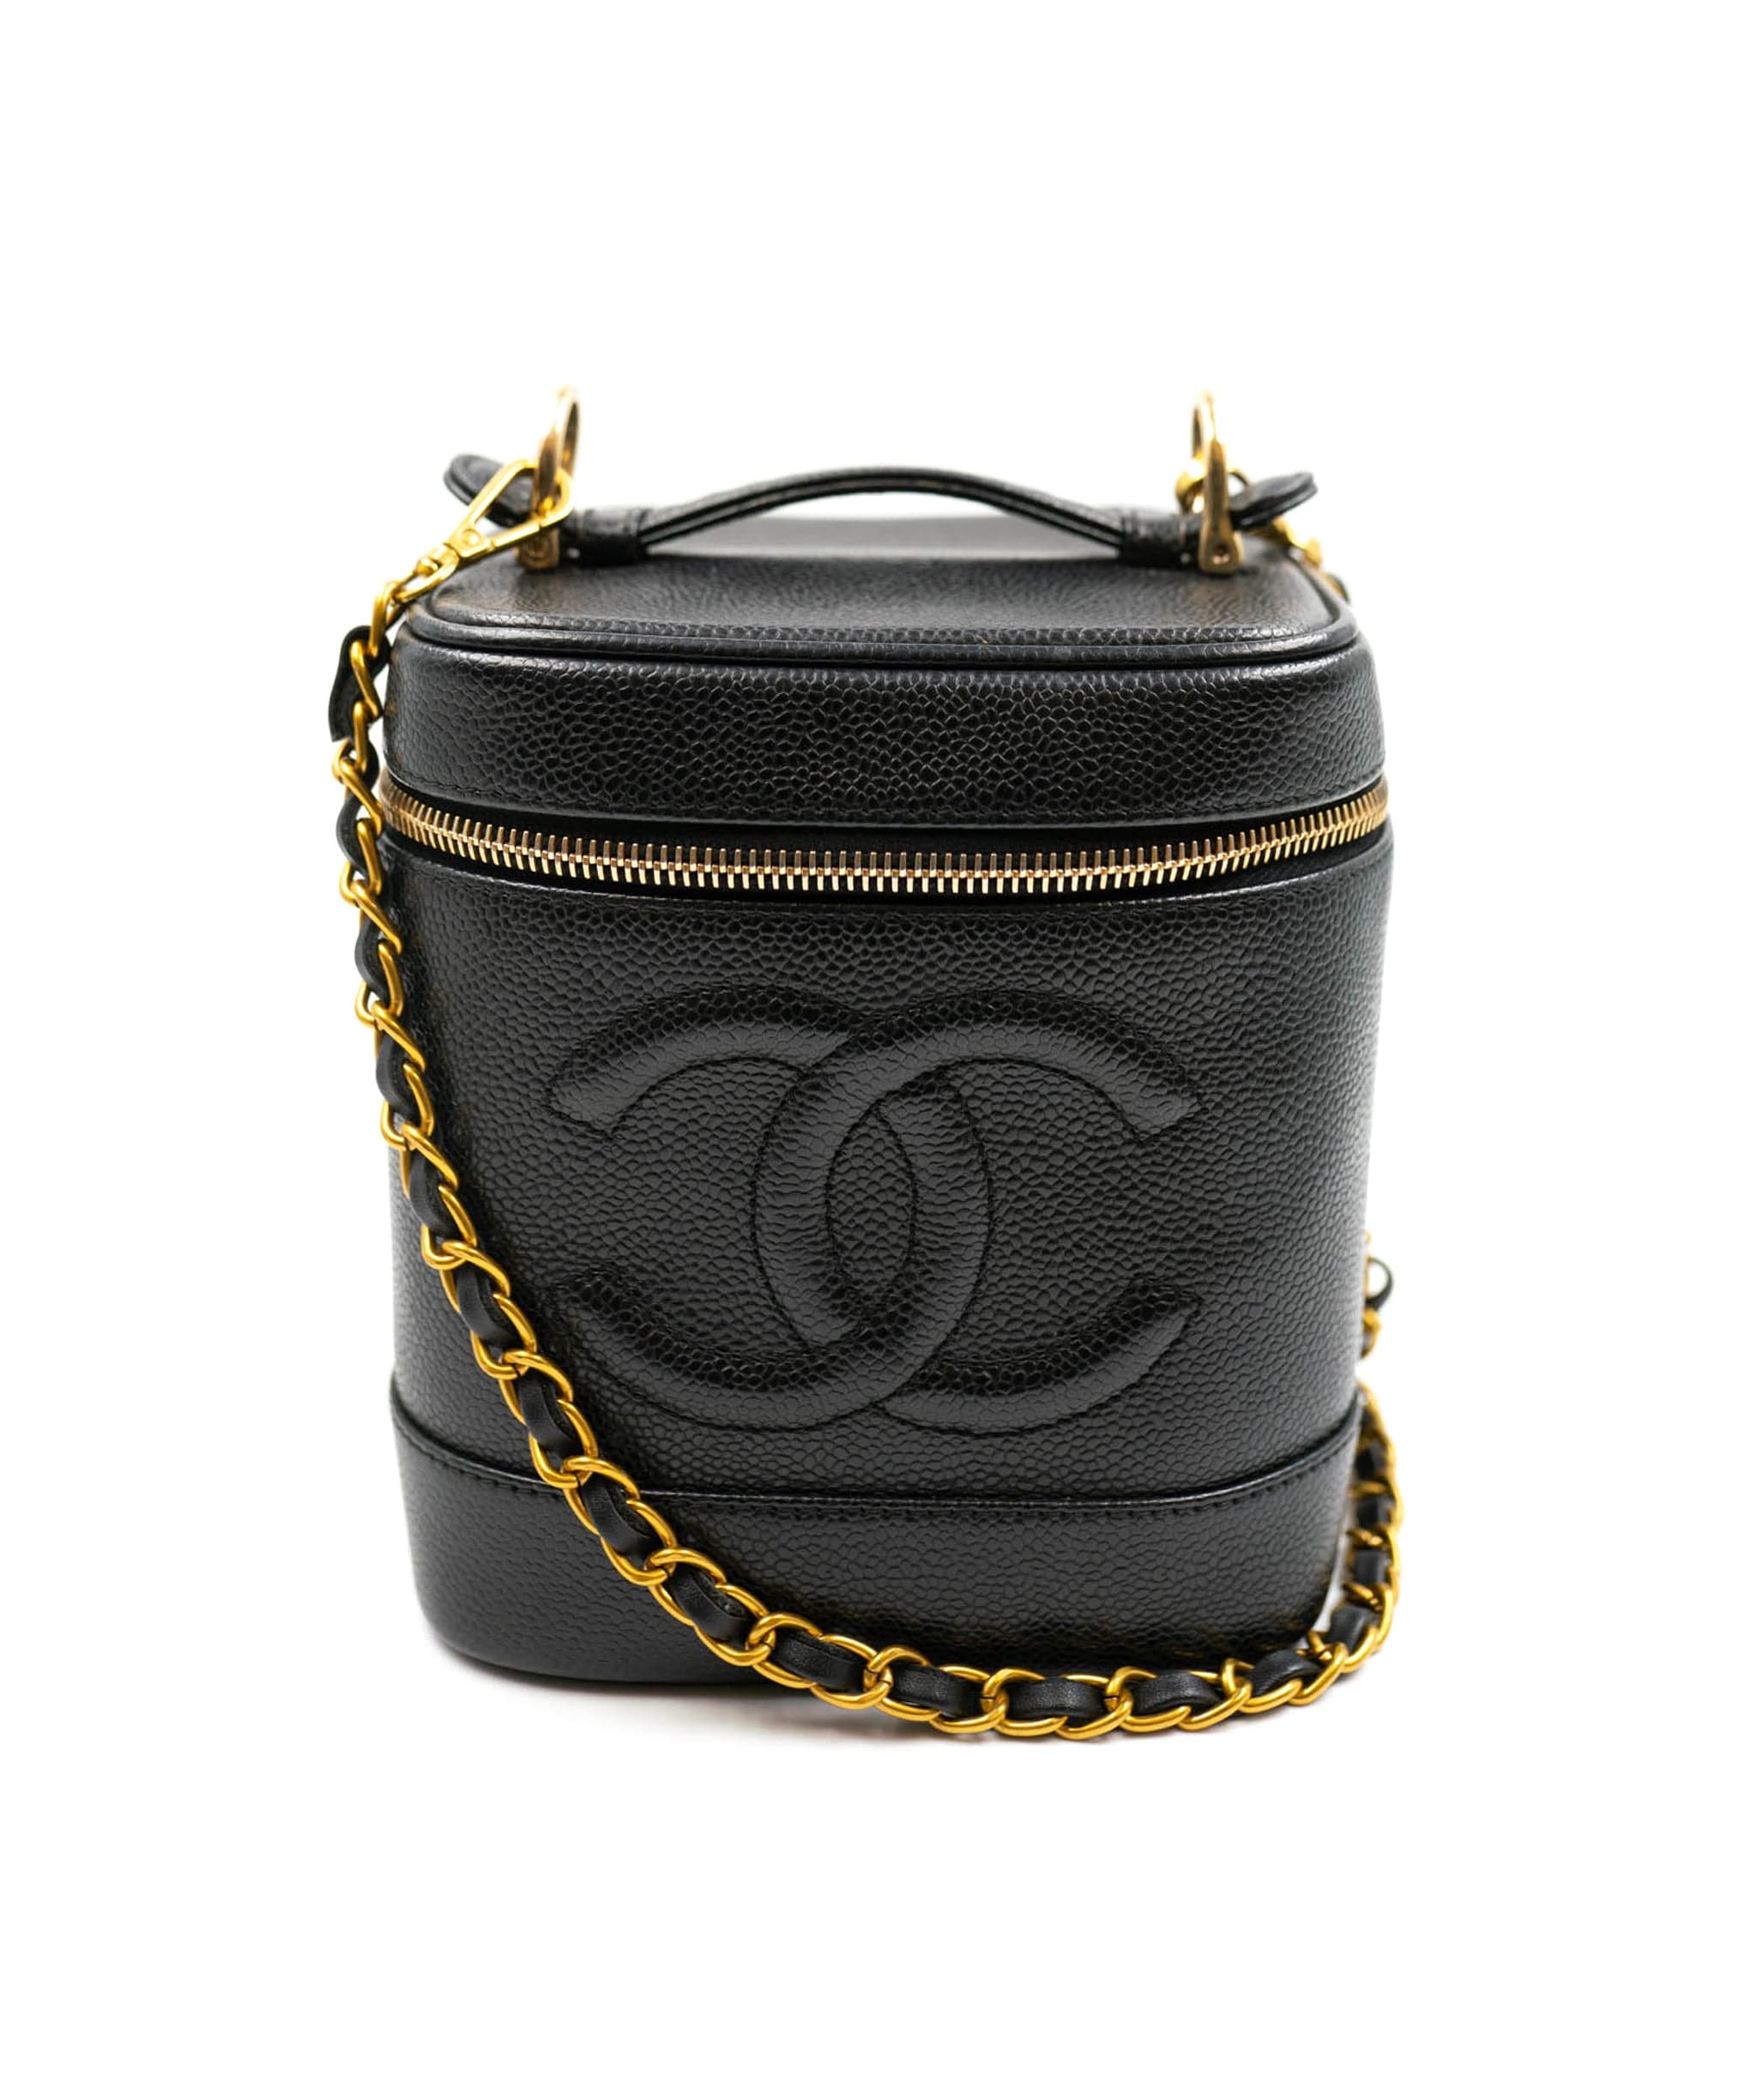 Chanel Chanel VTG Black Vanity Case With GHW SYL1049